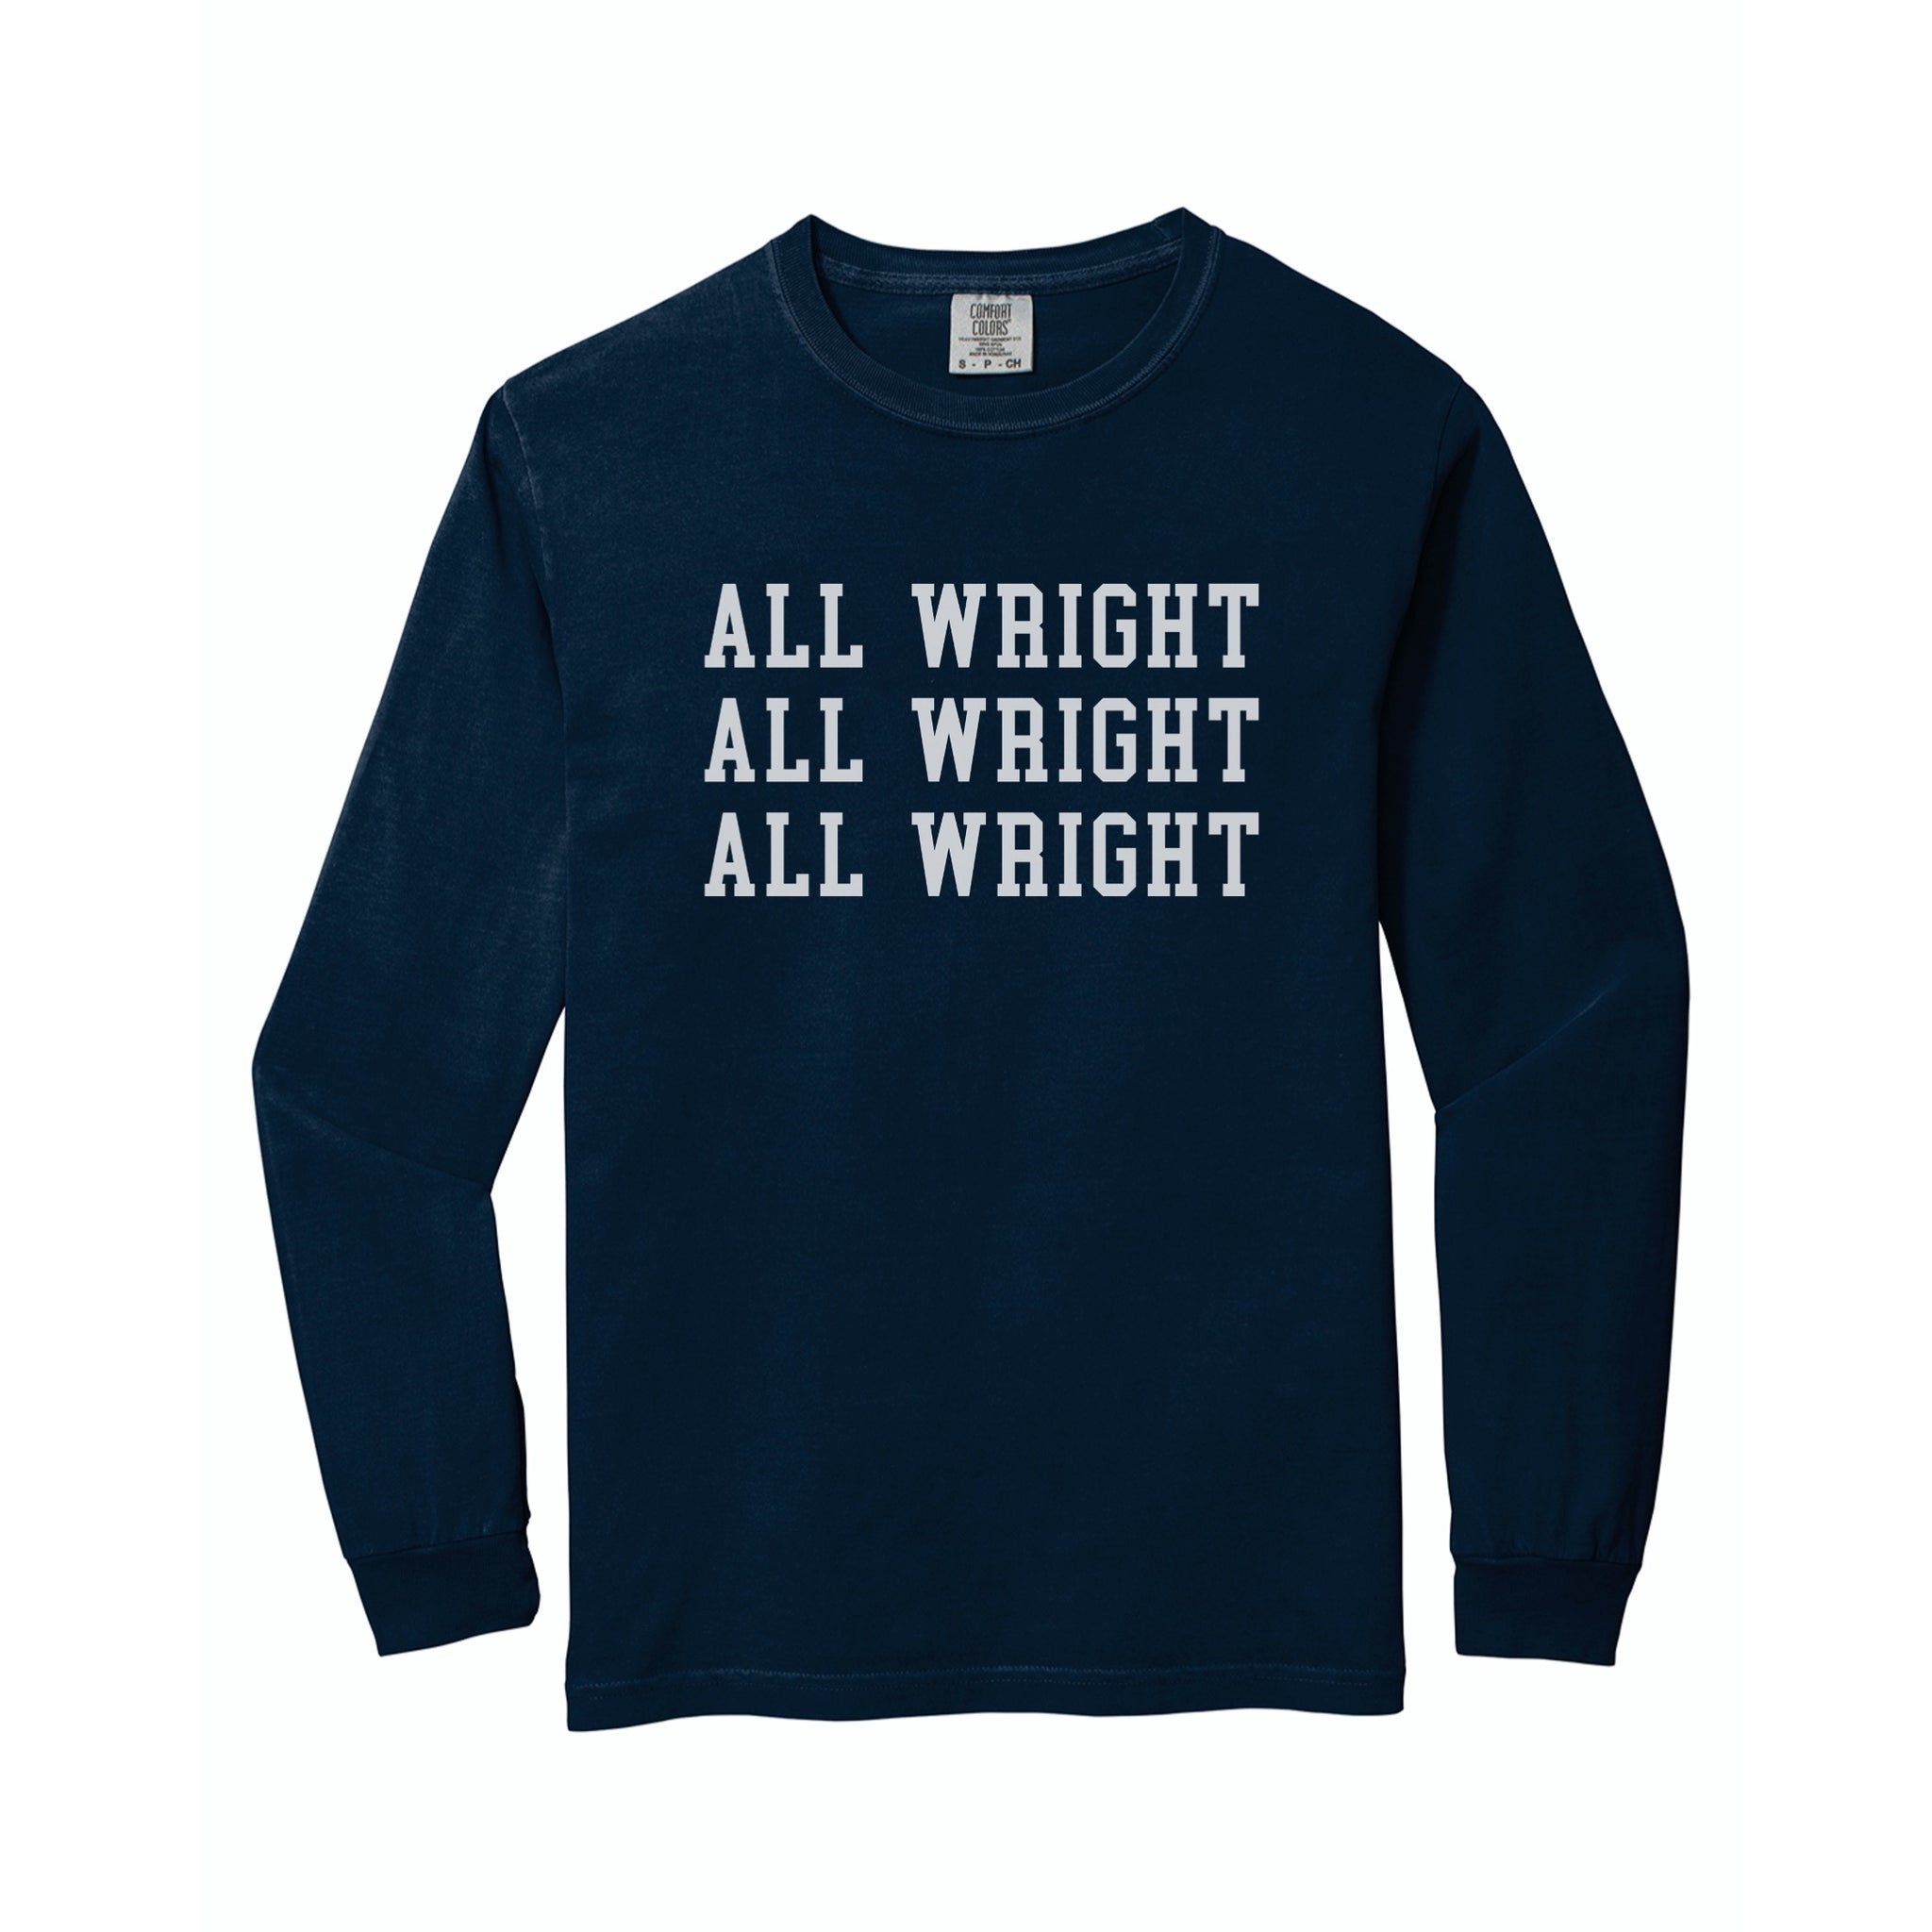 "All Wright" long sleeve shirt in True Navy